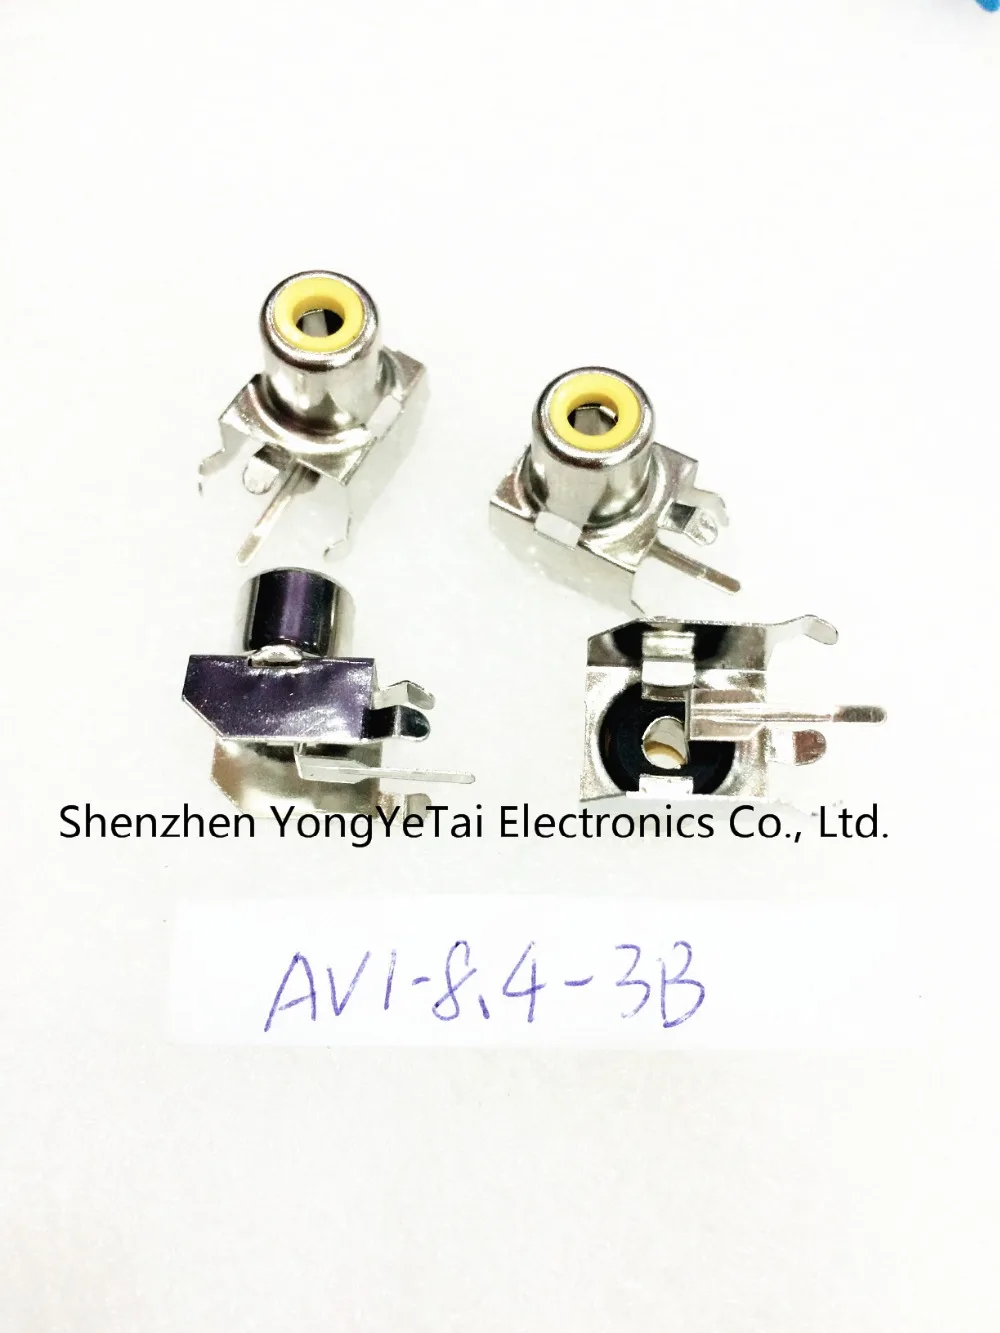 

YYT 10PCS RCA AV with the core socket hole seat 2 pin PCB soldering audio video jack lotus seat AV1-8.4-3B